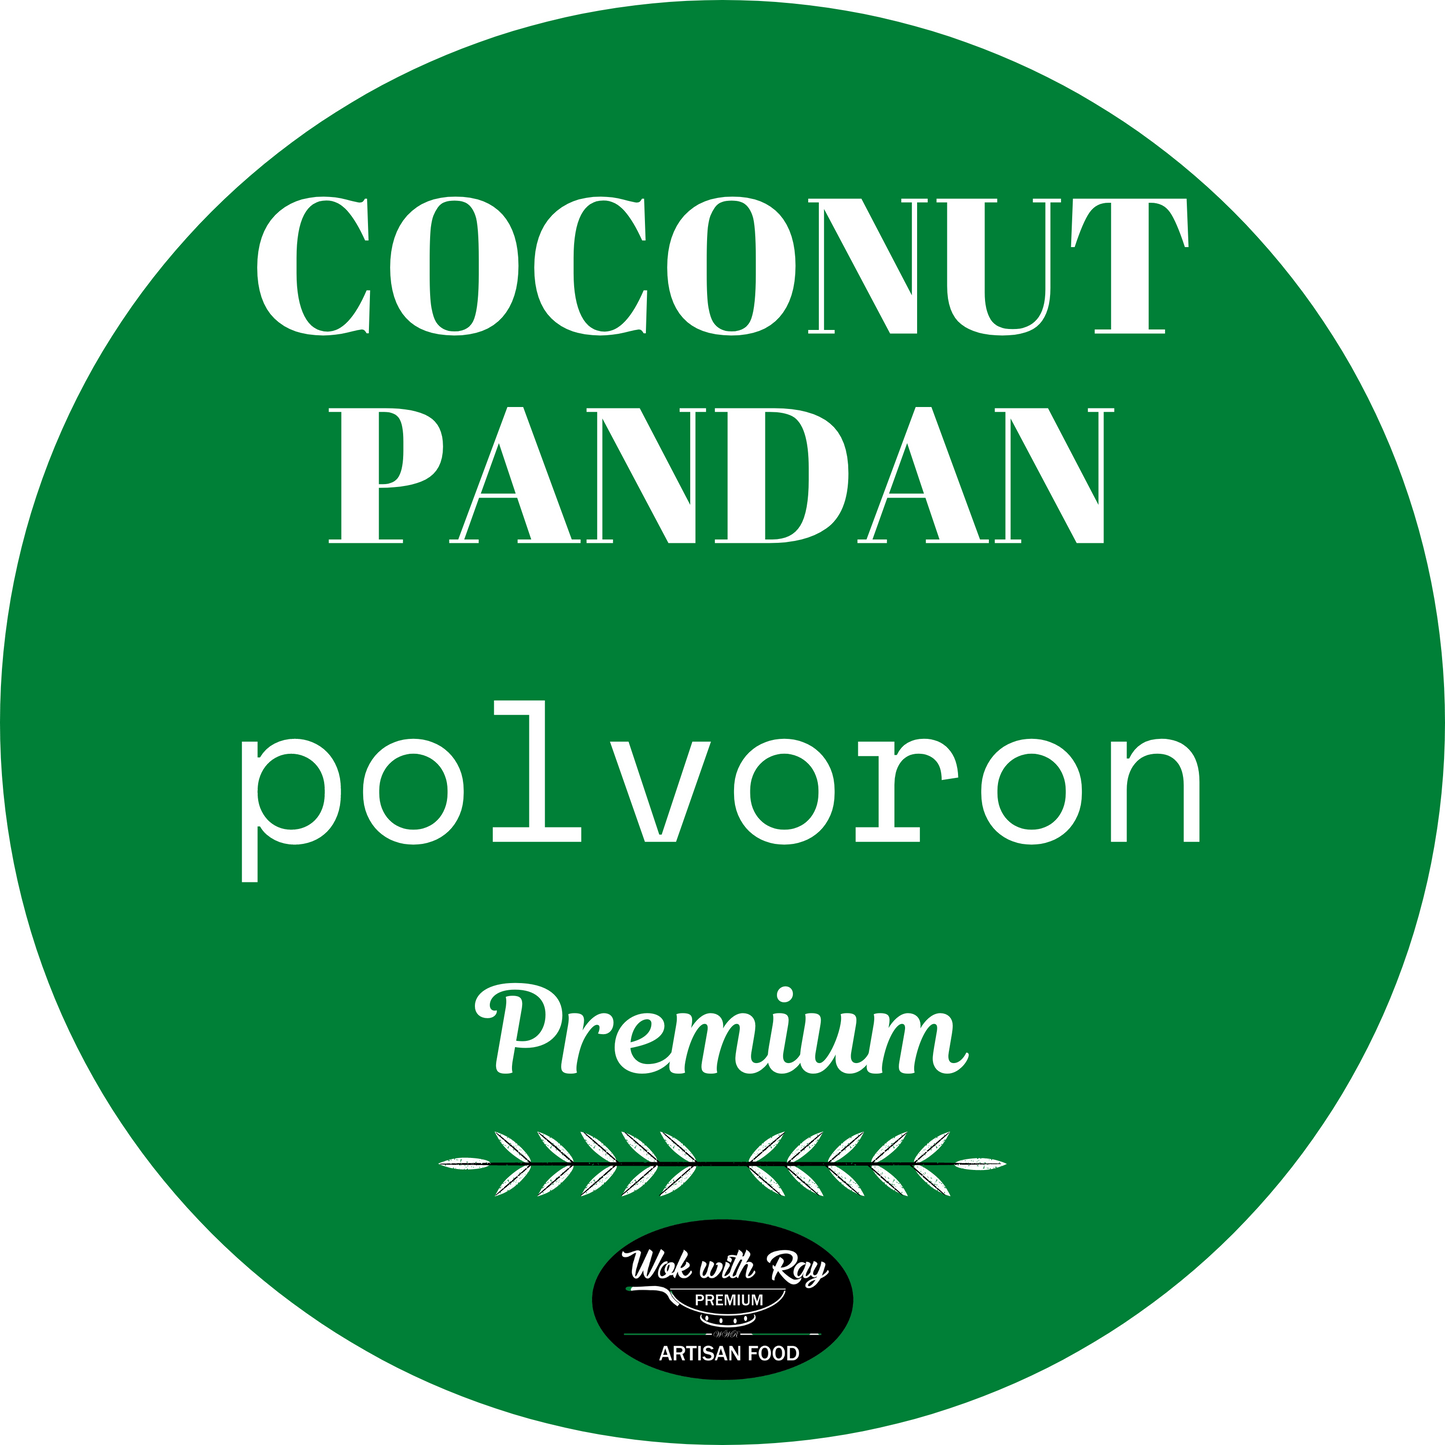 Coconut Pandan Polvoron